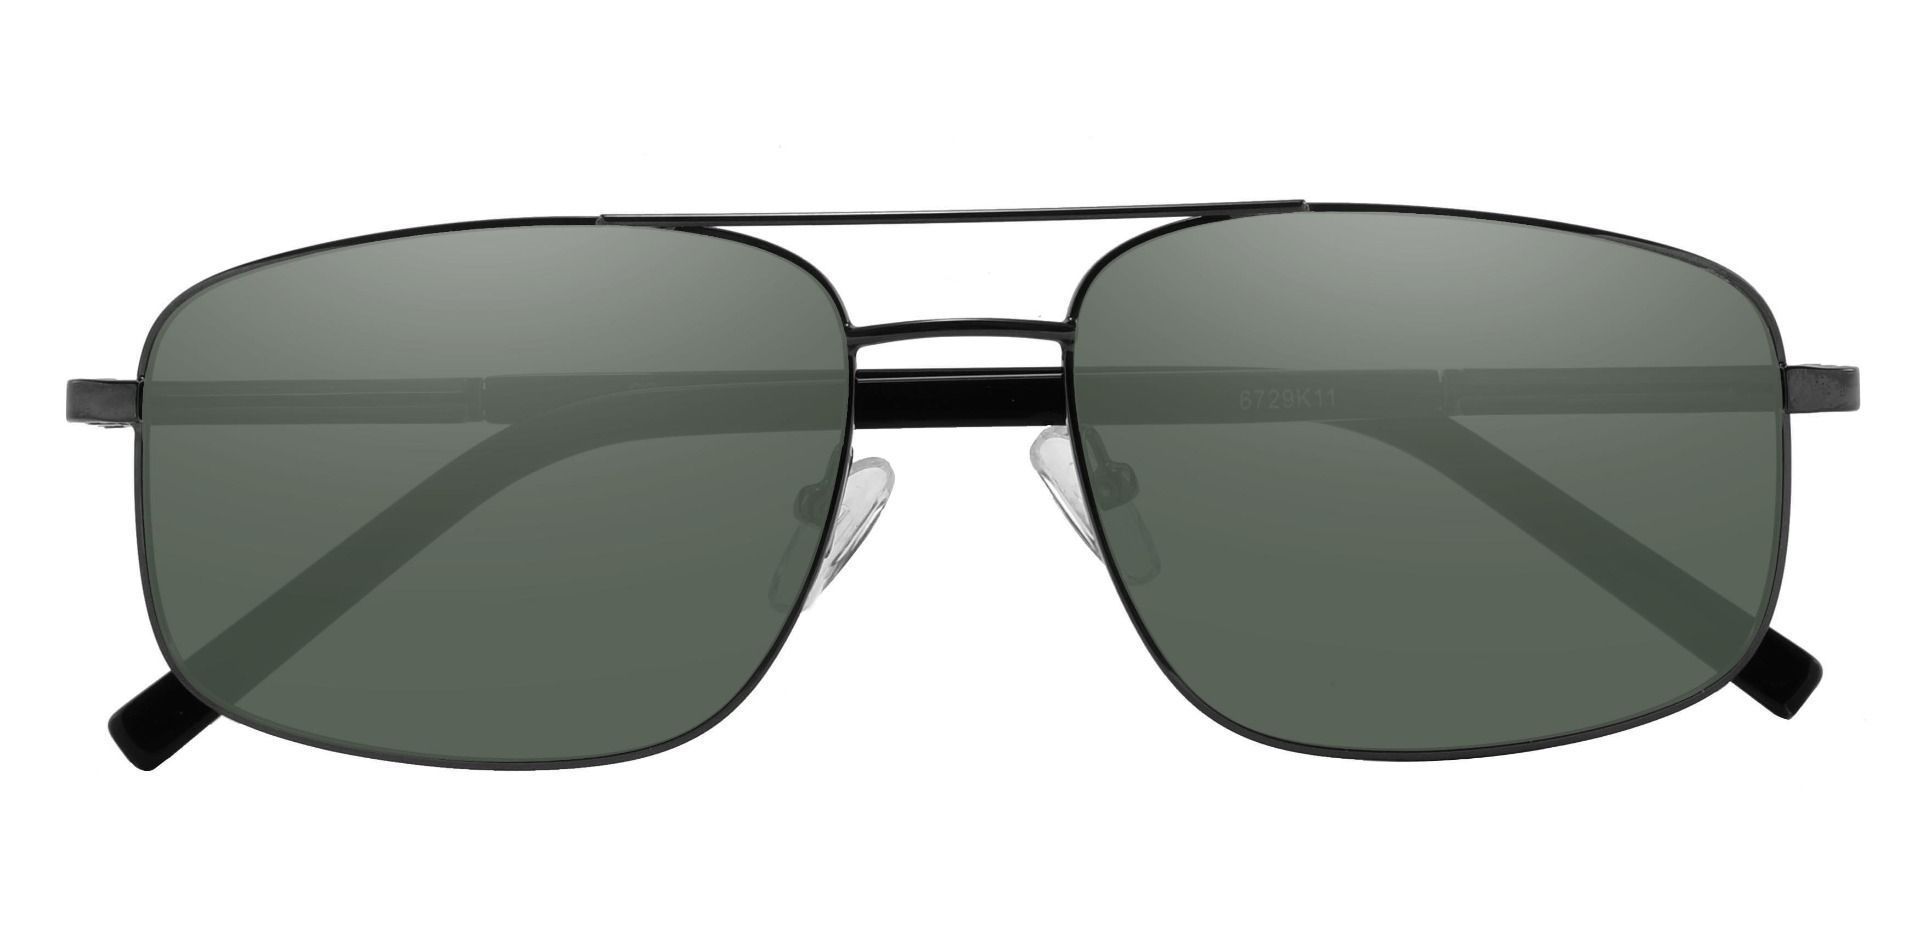 Davenport Aviator Non-Rx Sunglasses - Black Frame With Green Lenses